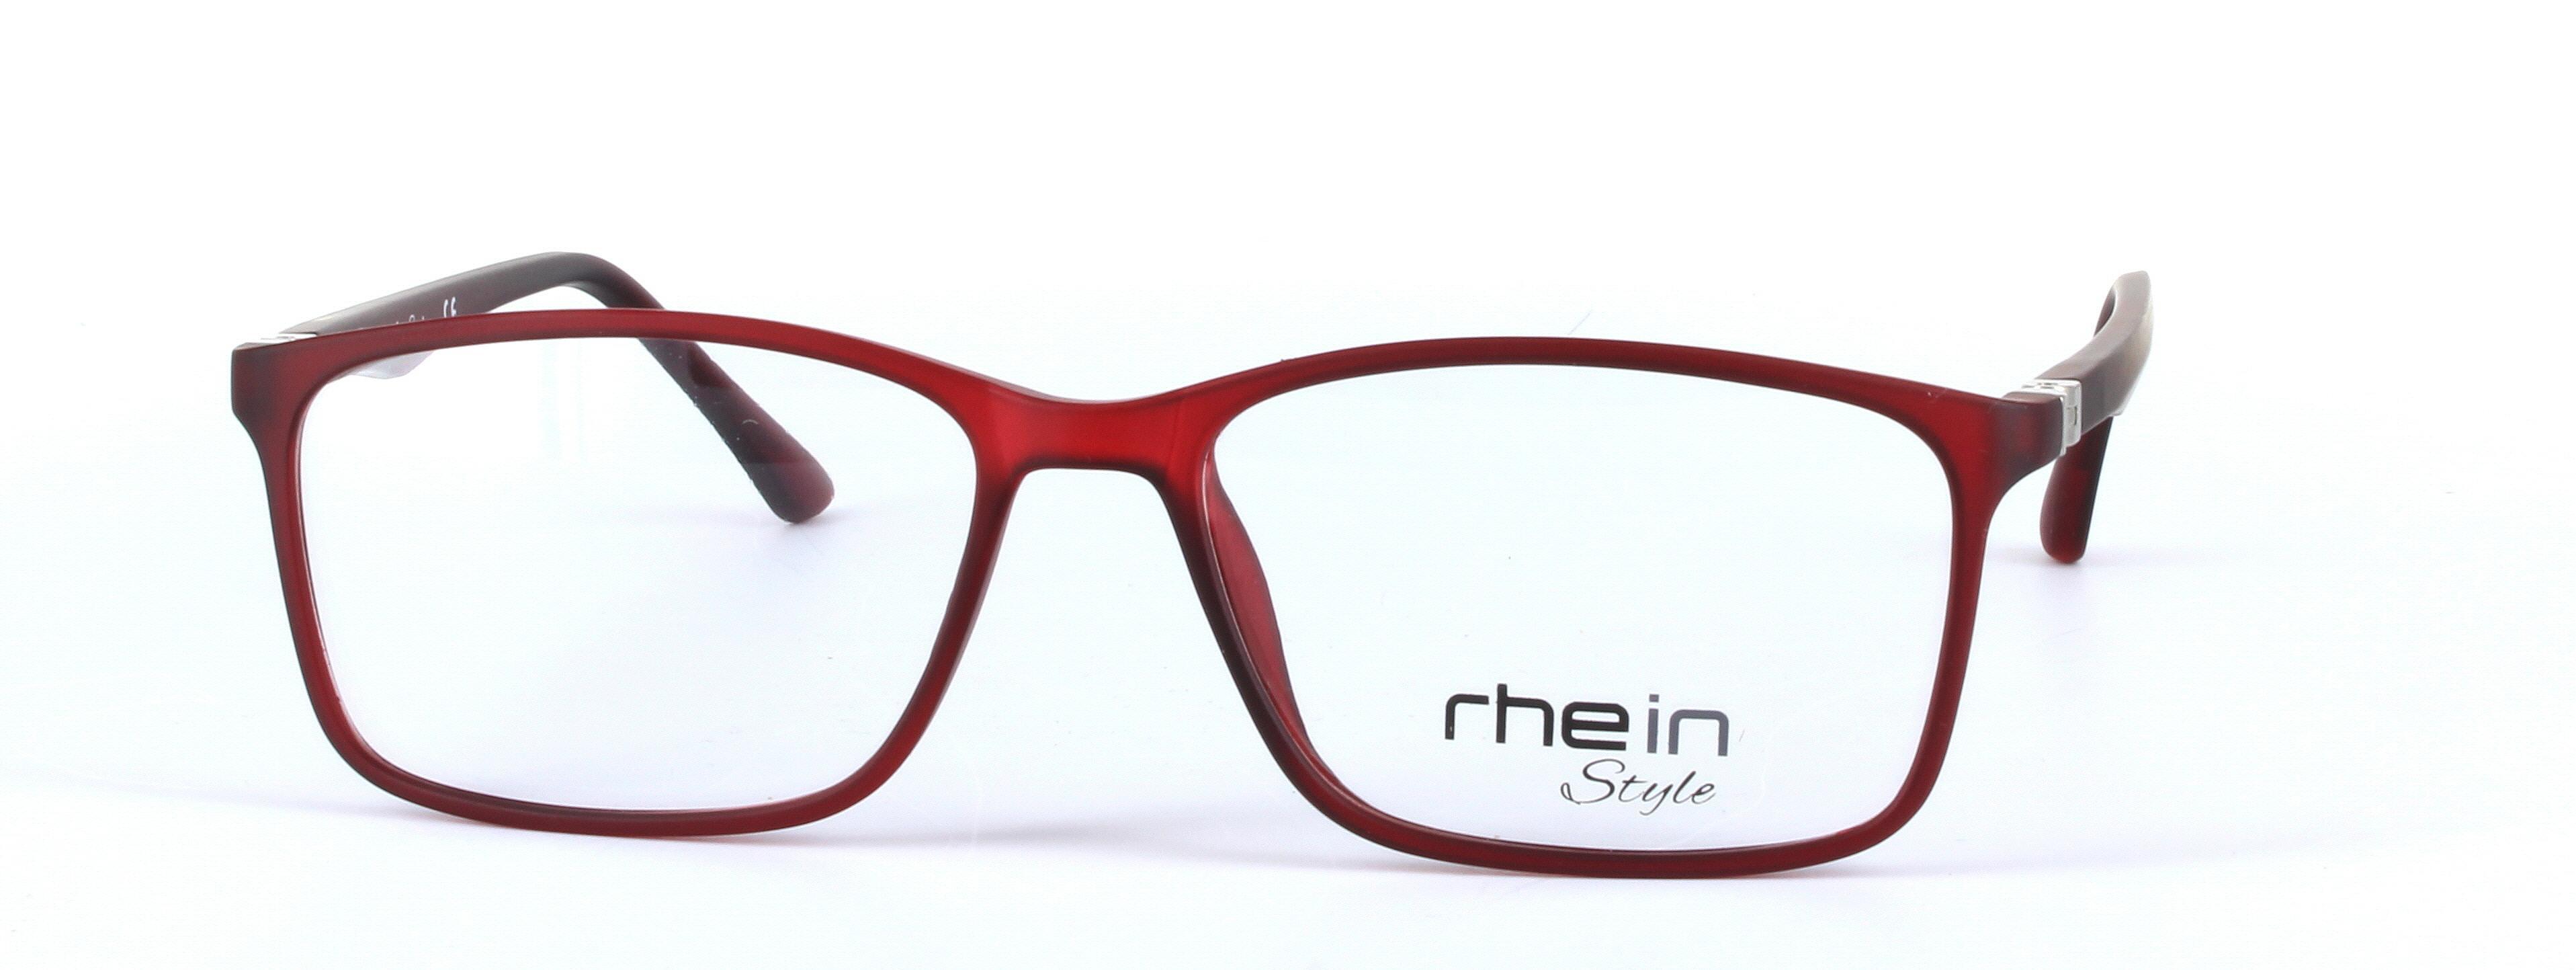 Franky Reddish Brown Full Rim Oval Rectangular Plastic Glasses - Image View 5